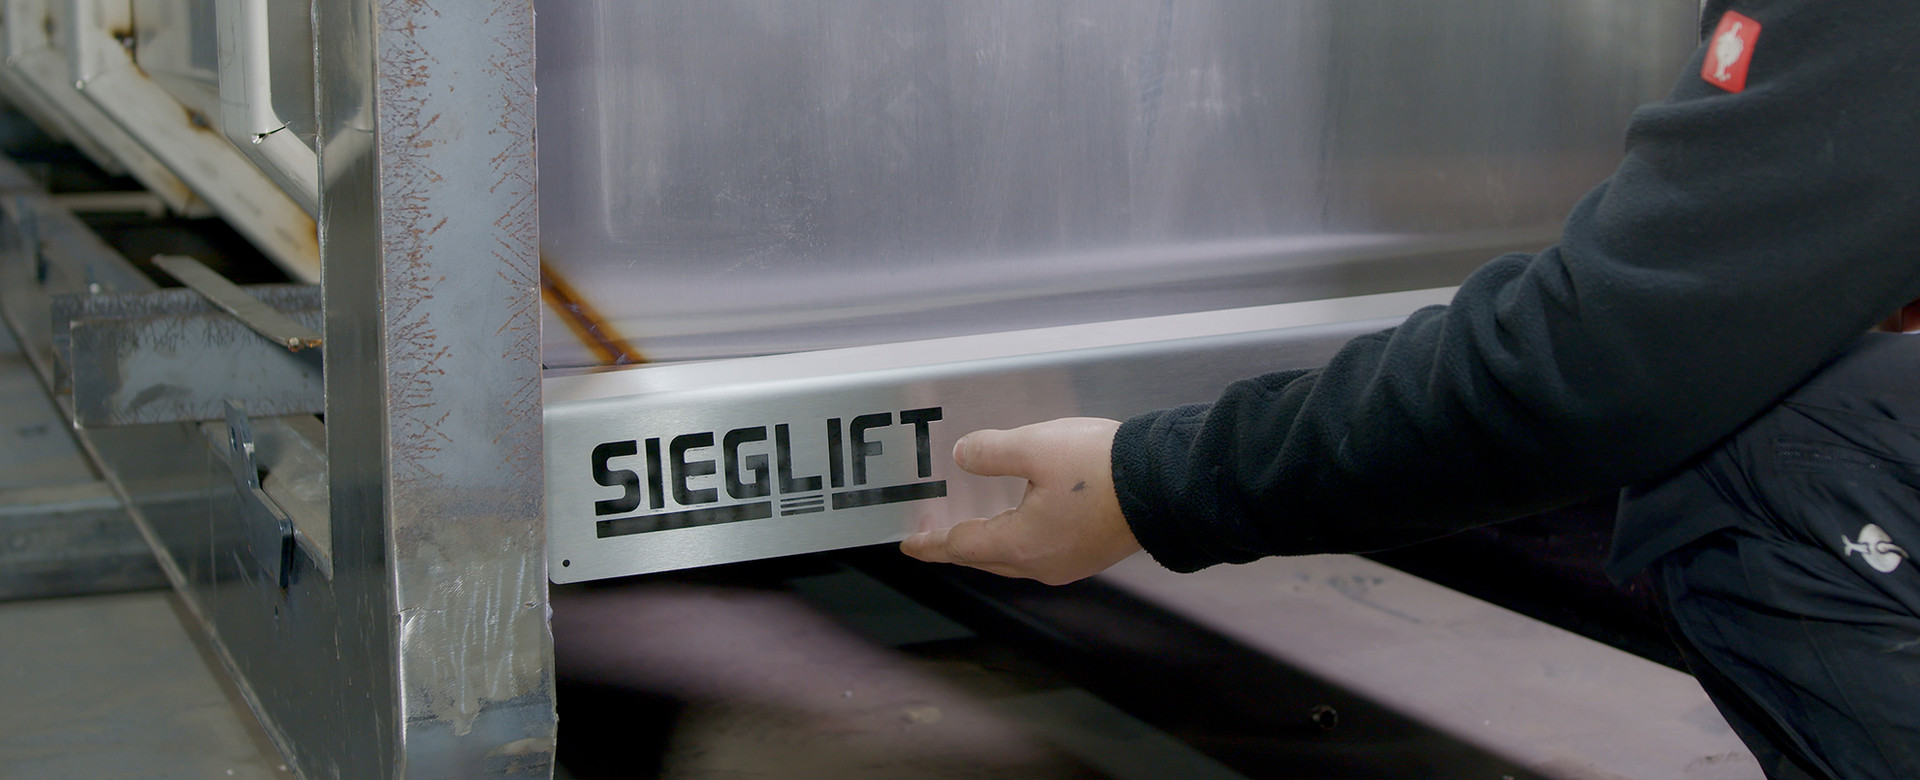 Sieglift GmbH